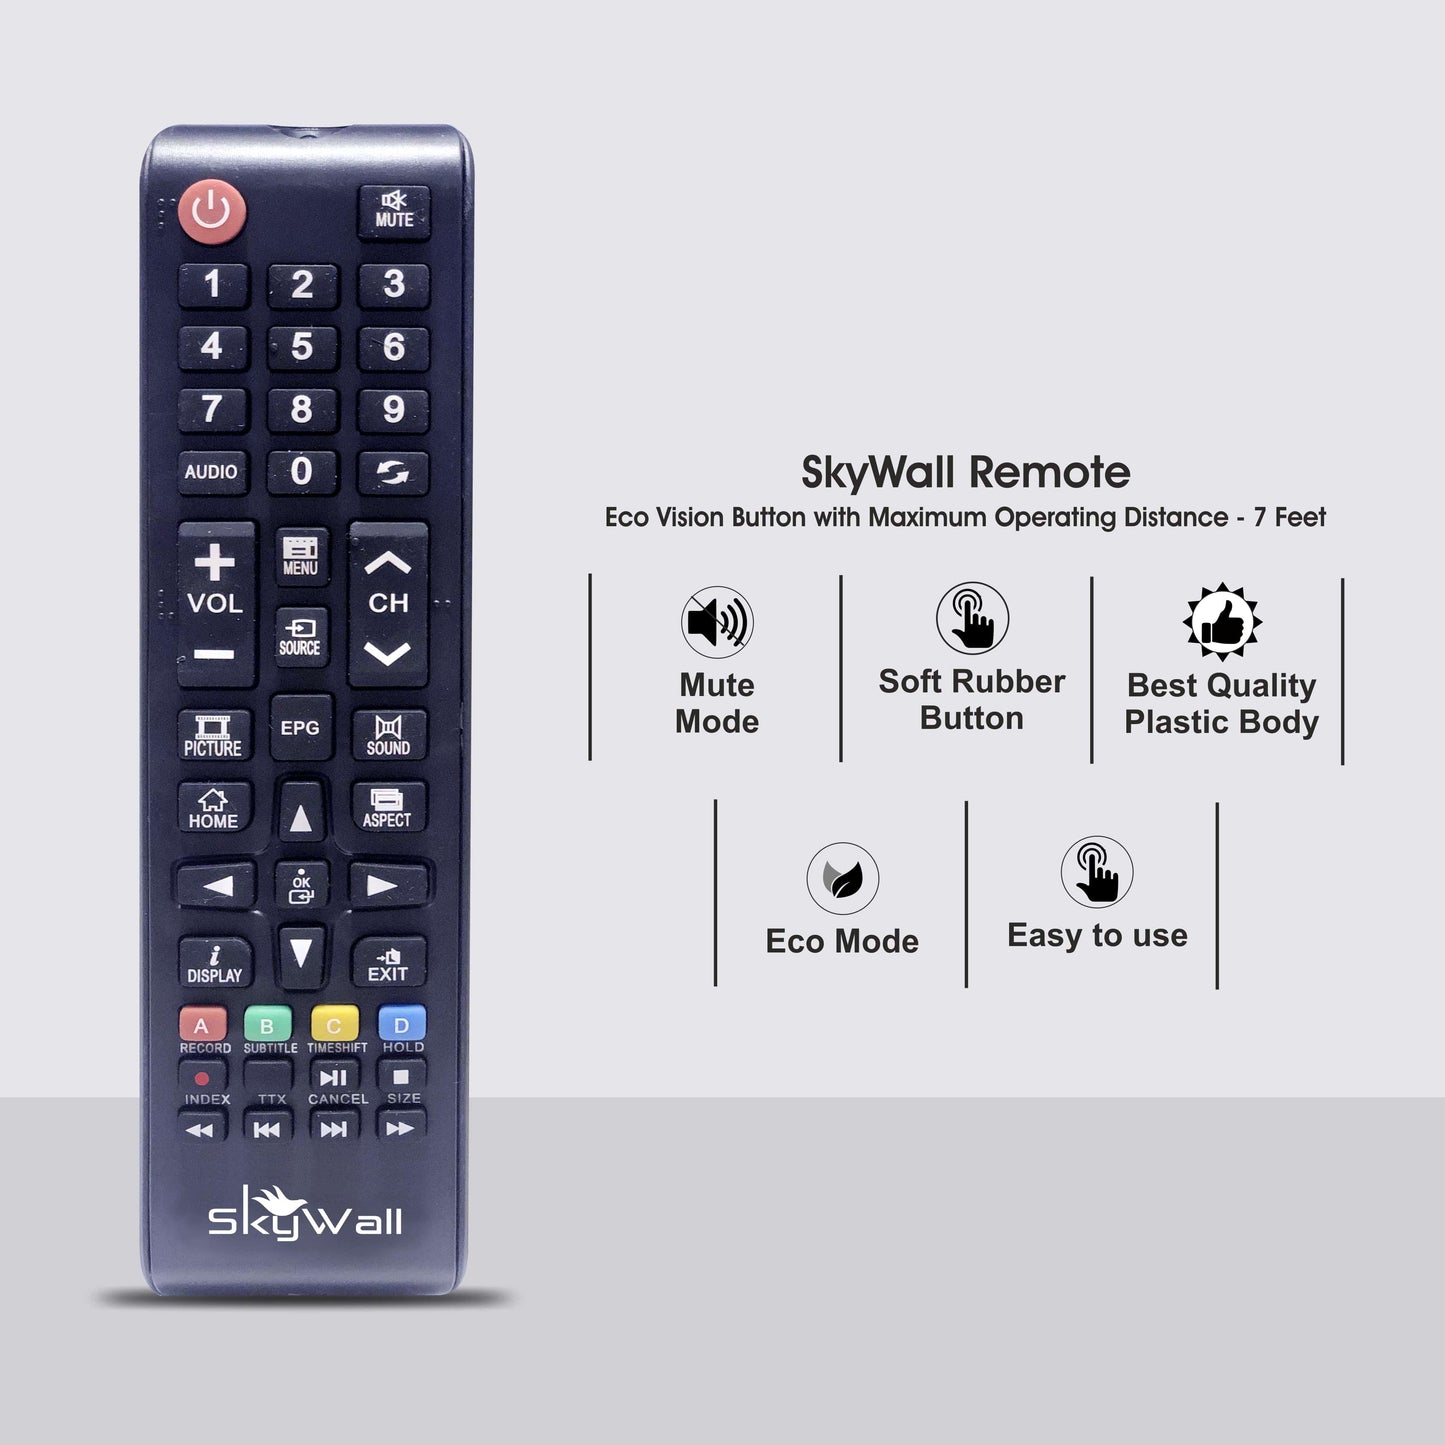 SkyWall™ TV HD Ready TV SkyWall 60.96 cm (24 inch) HD Ready LED TV 24SWATV With A+ Grade Panel (slim bezels)